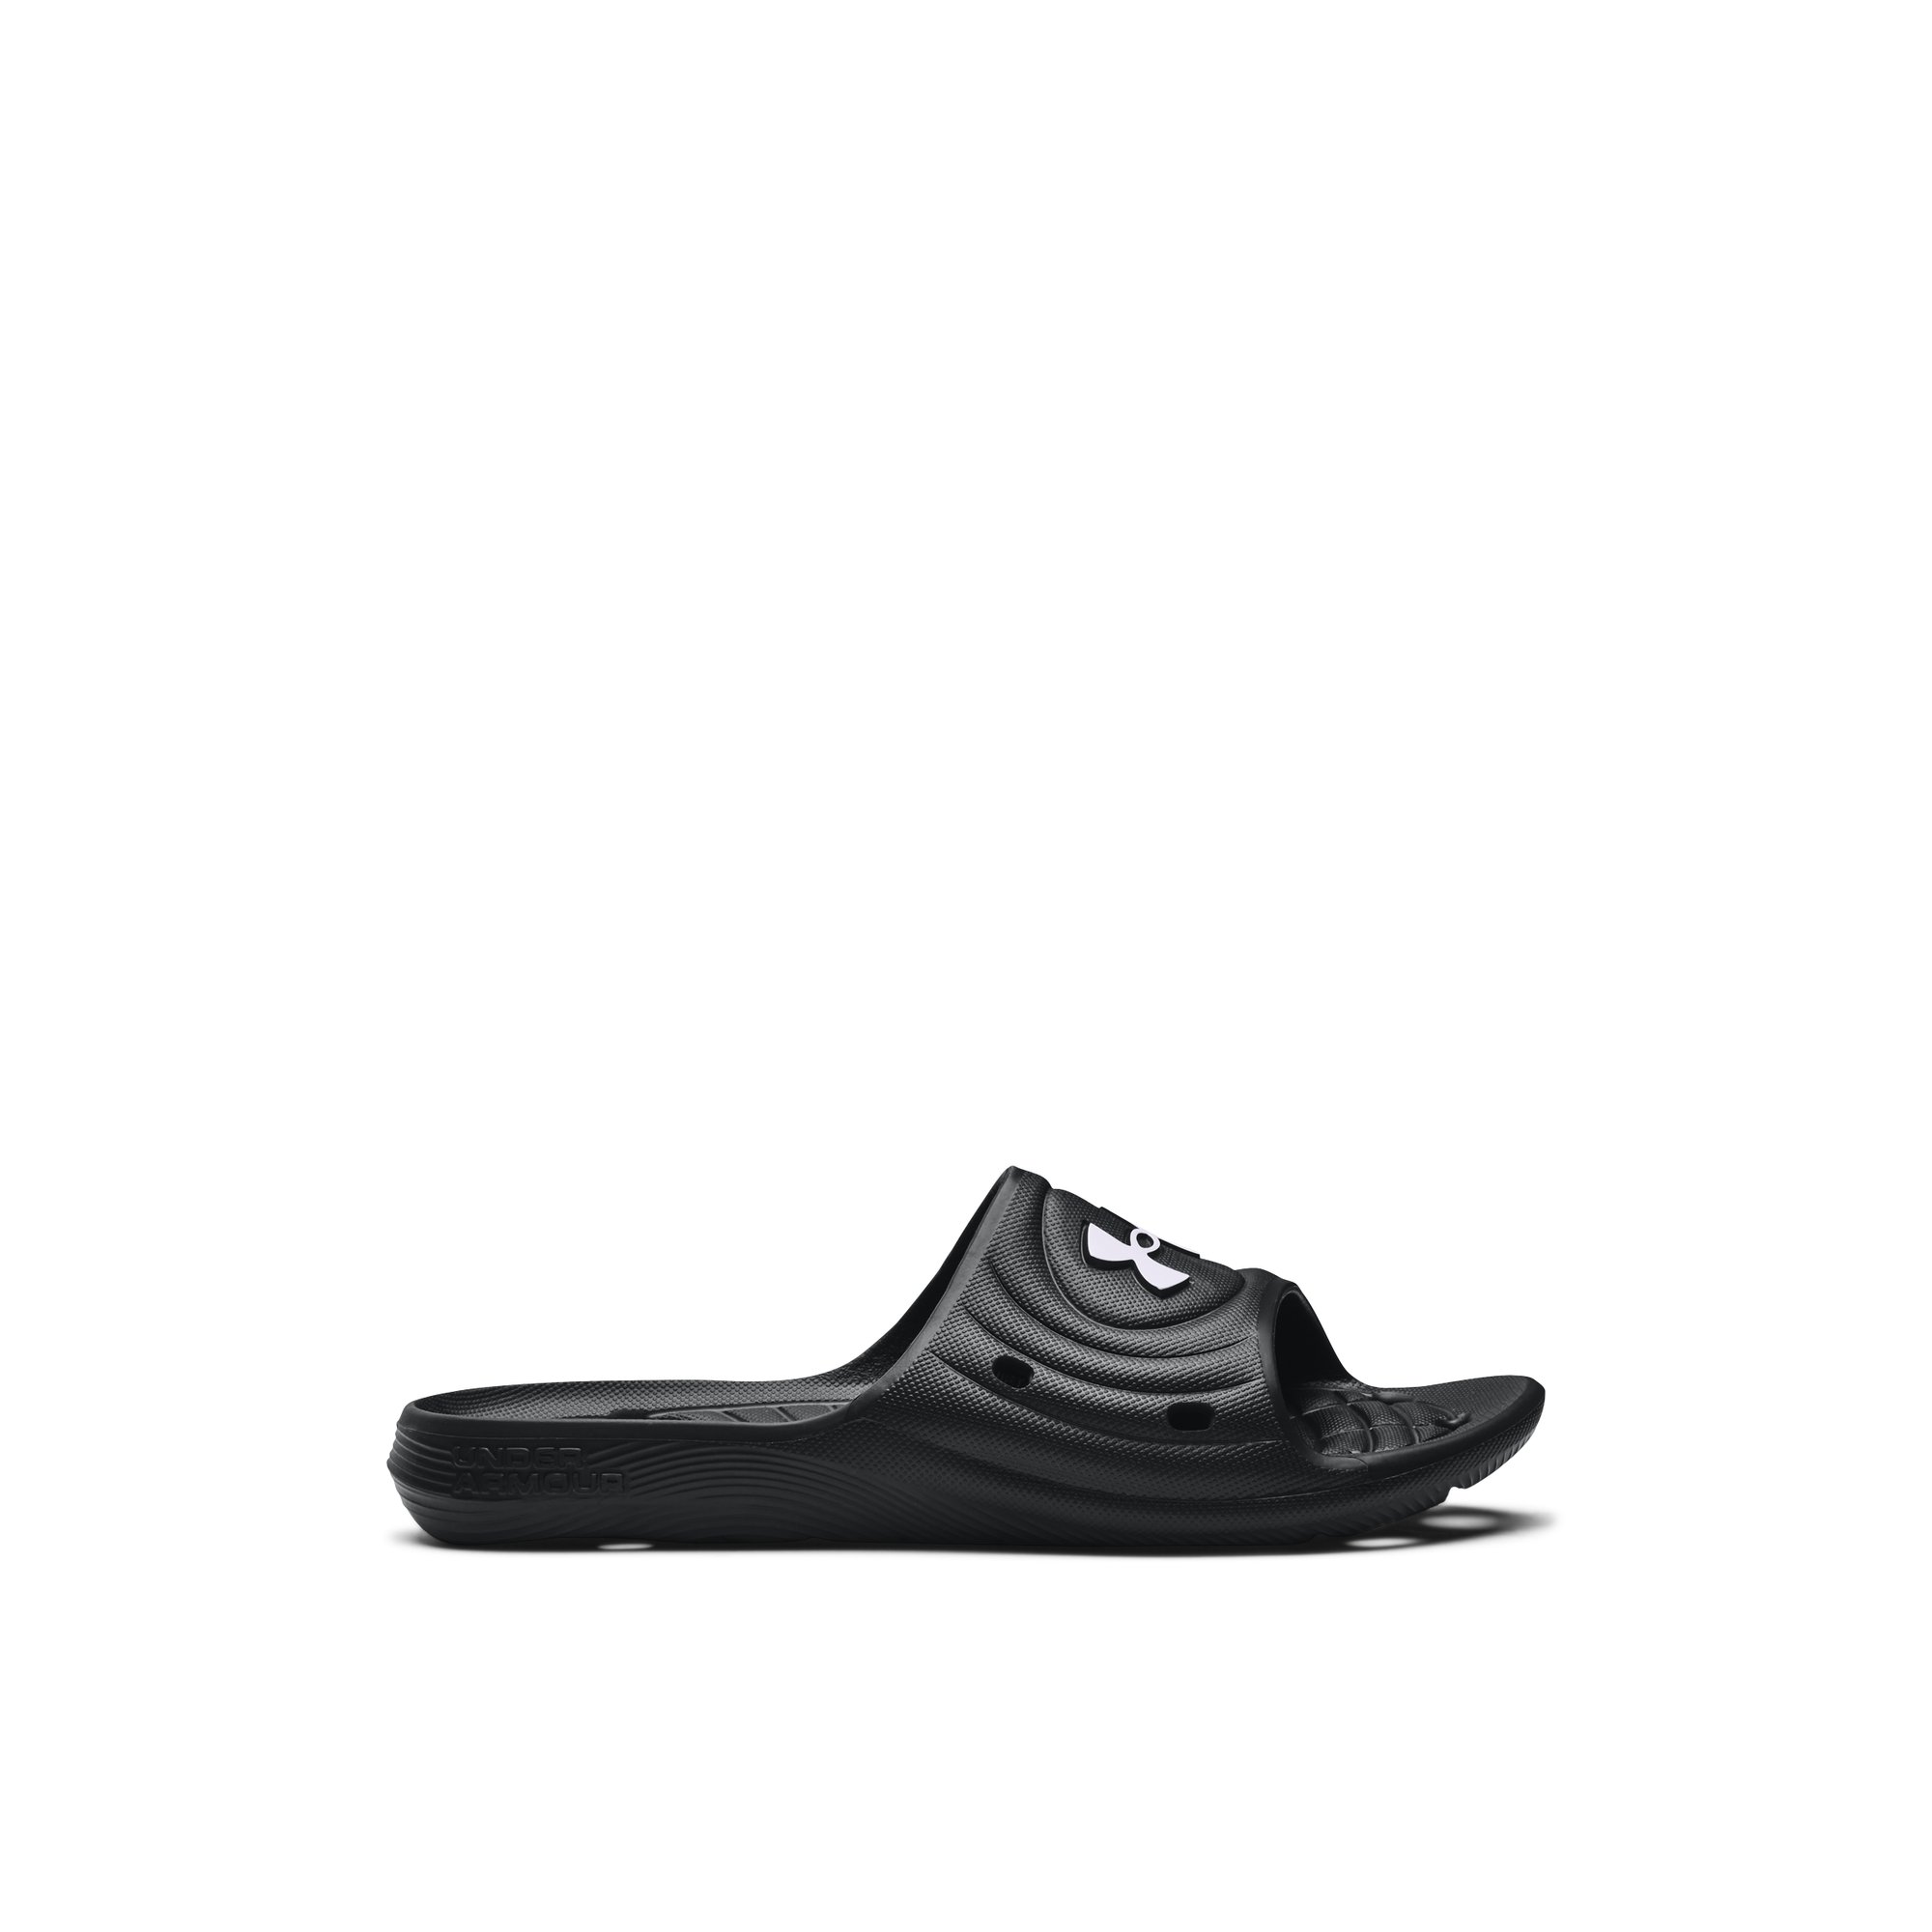 Under Armour Lockeriv-Slide - Men's Shoes Black